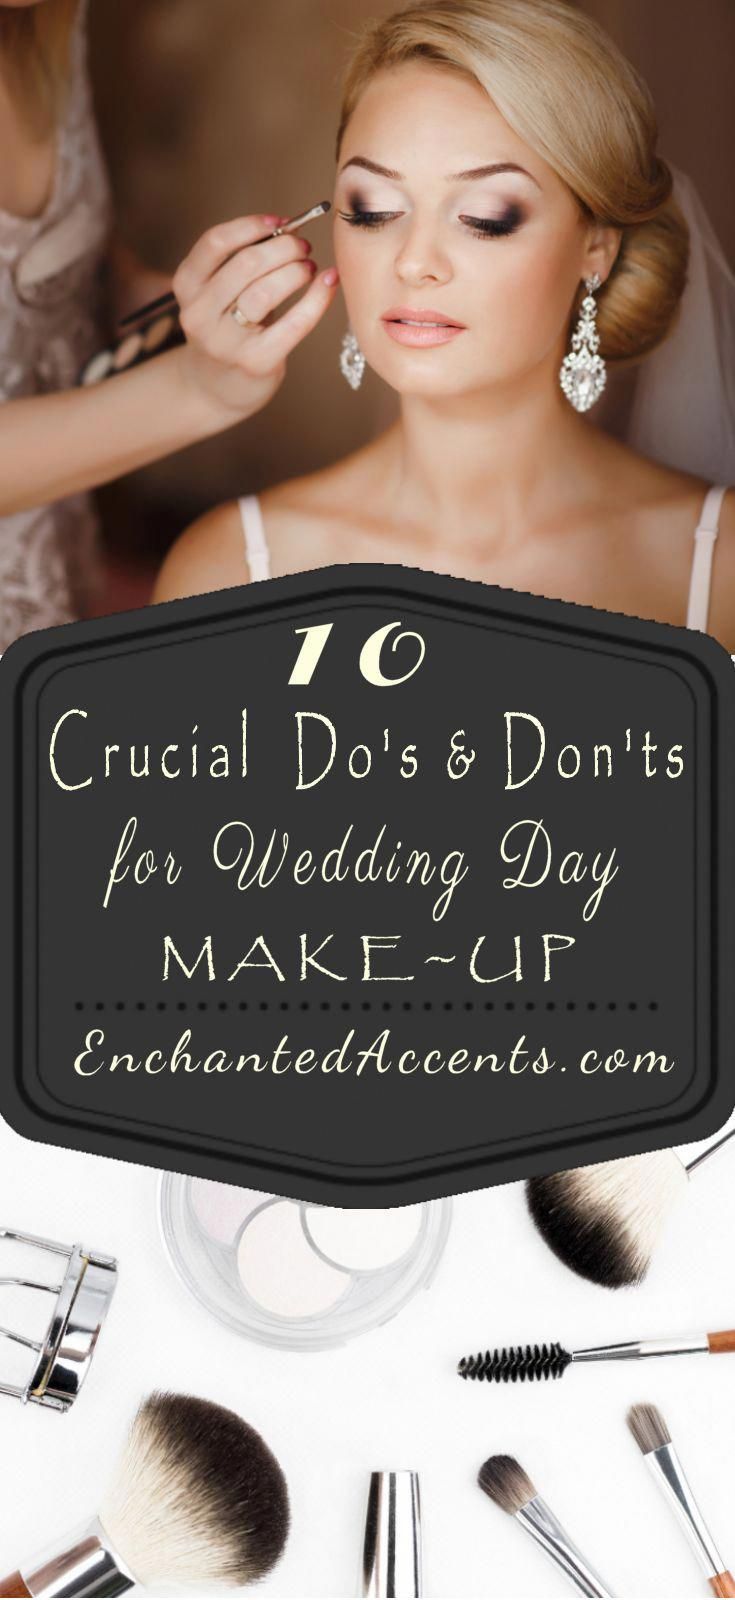 8 makeup Face wedding ideas